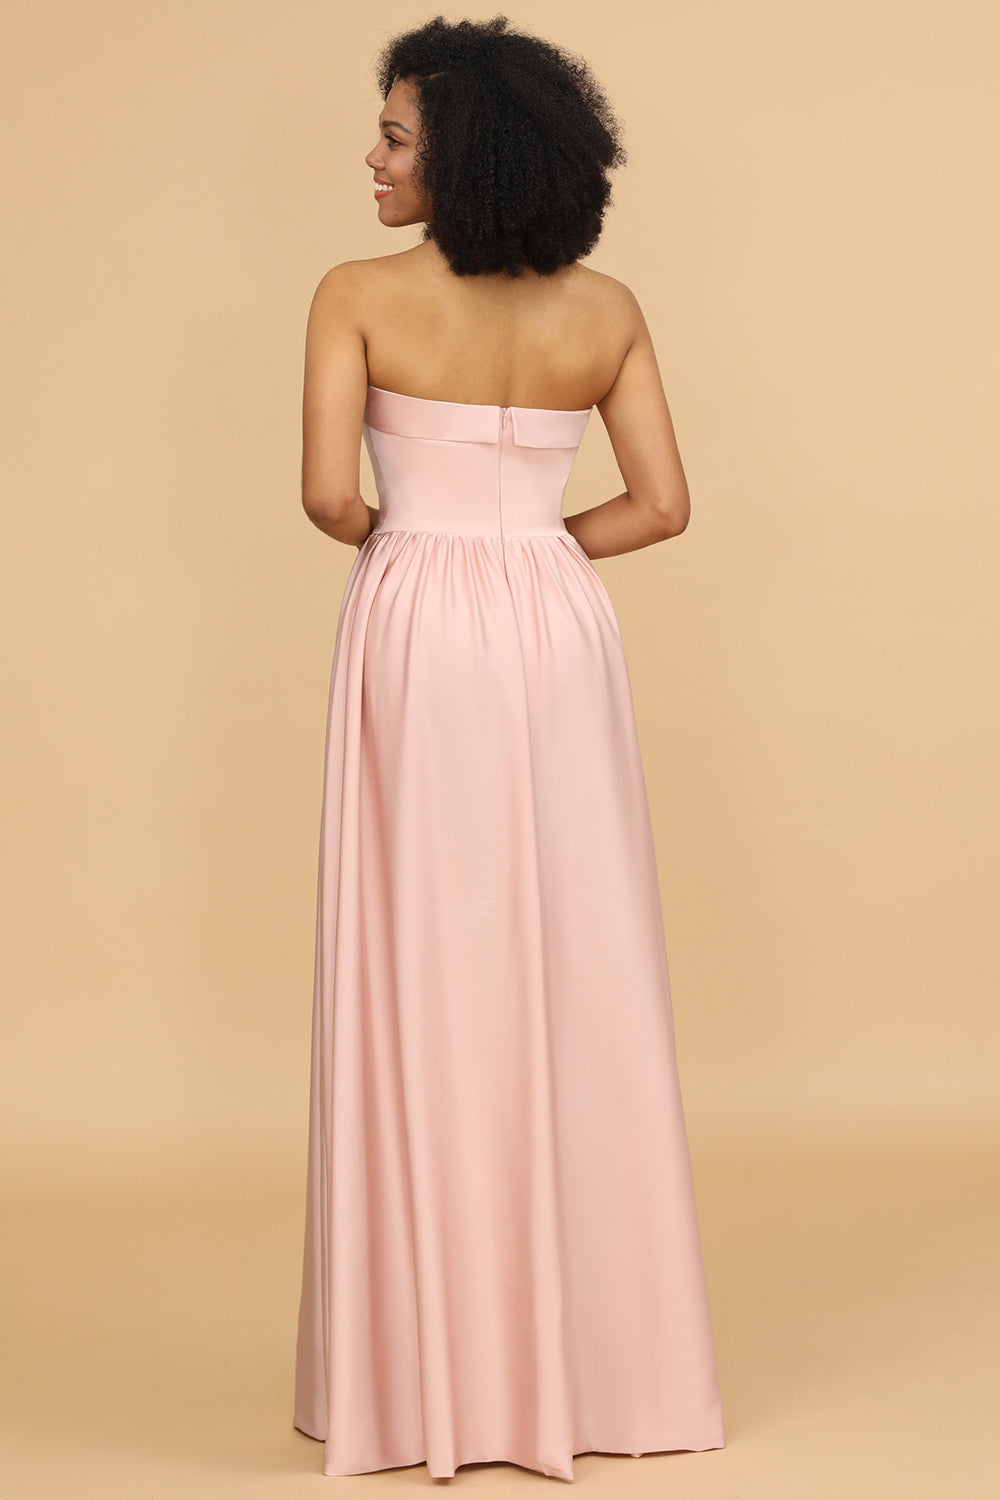 Blush Pink A Line Strapless Satin Long Bridesmaid Dress